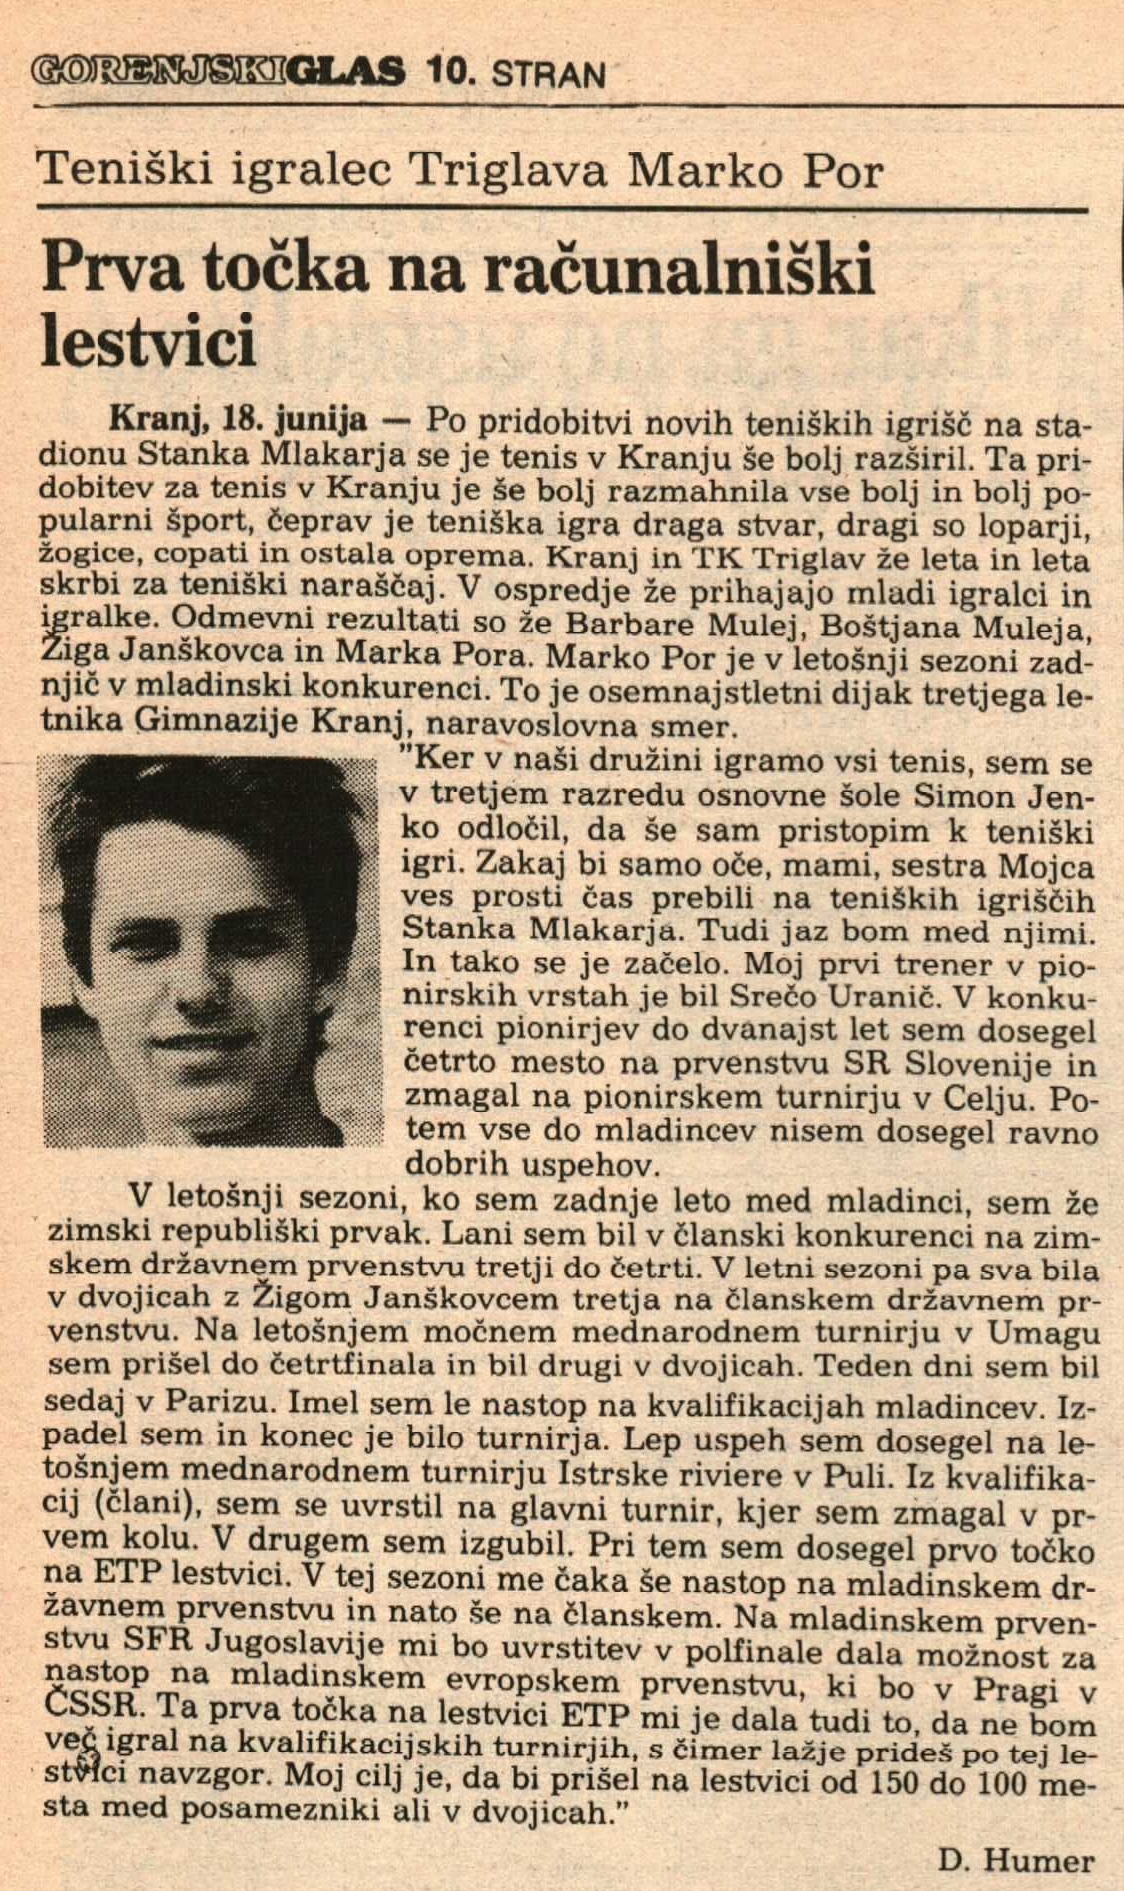 20.06.1989_Prva_tocka_na_racunalniski_lestvici_GG.JPG